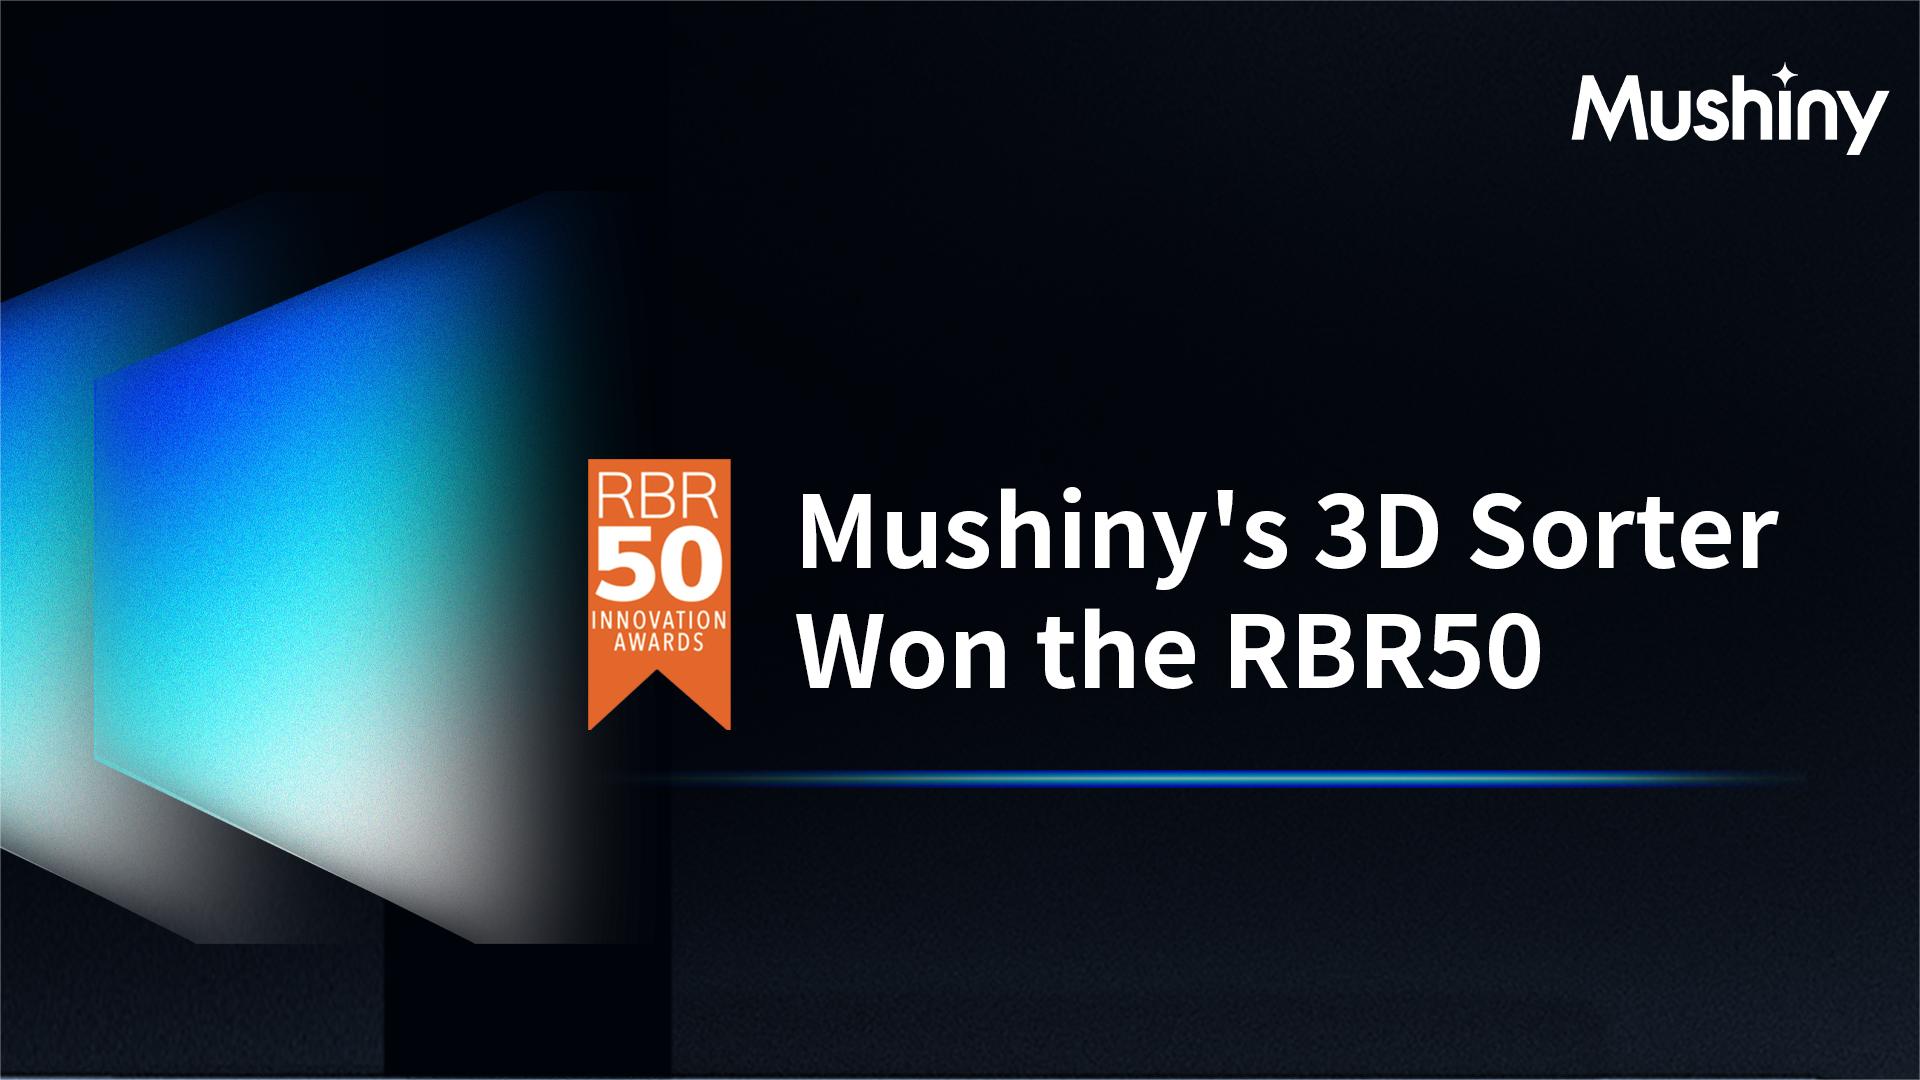 Mushiny의 3D 분류기는 RBR50 Robotics Innovation Awards에서 선구적인 스마트 물류로 인정받았습니다.